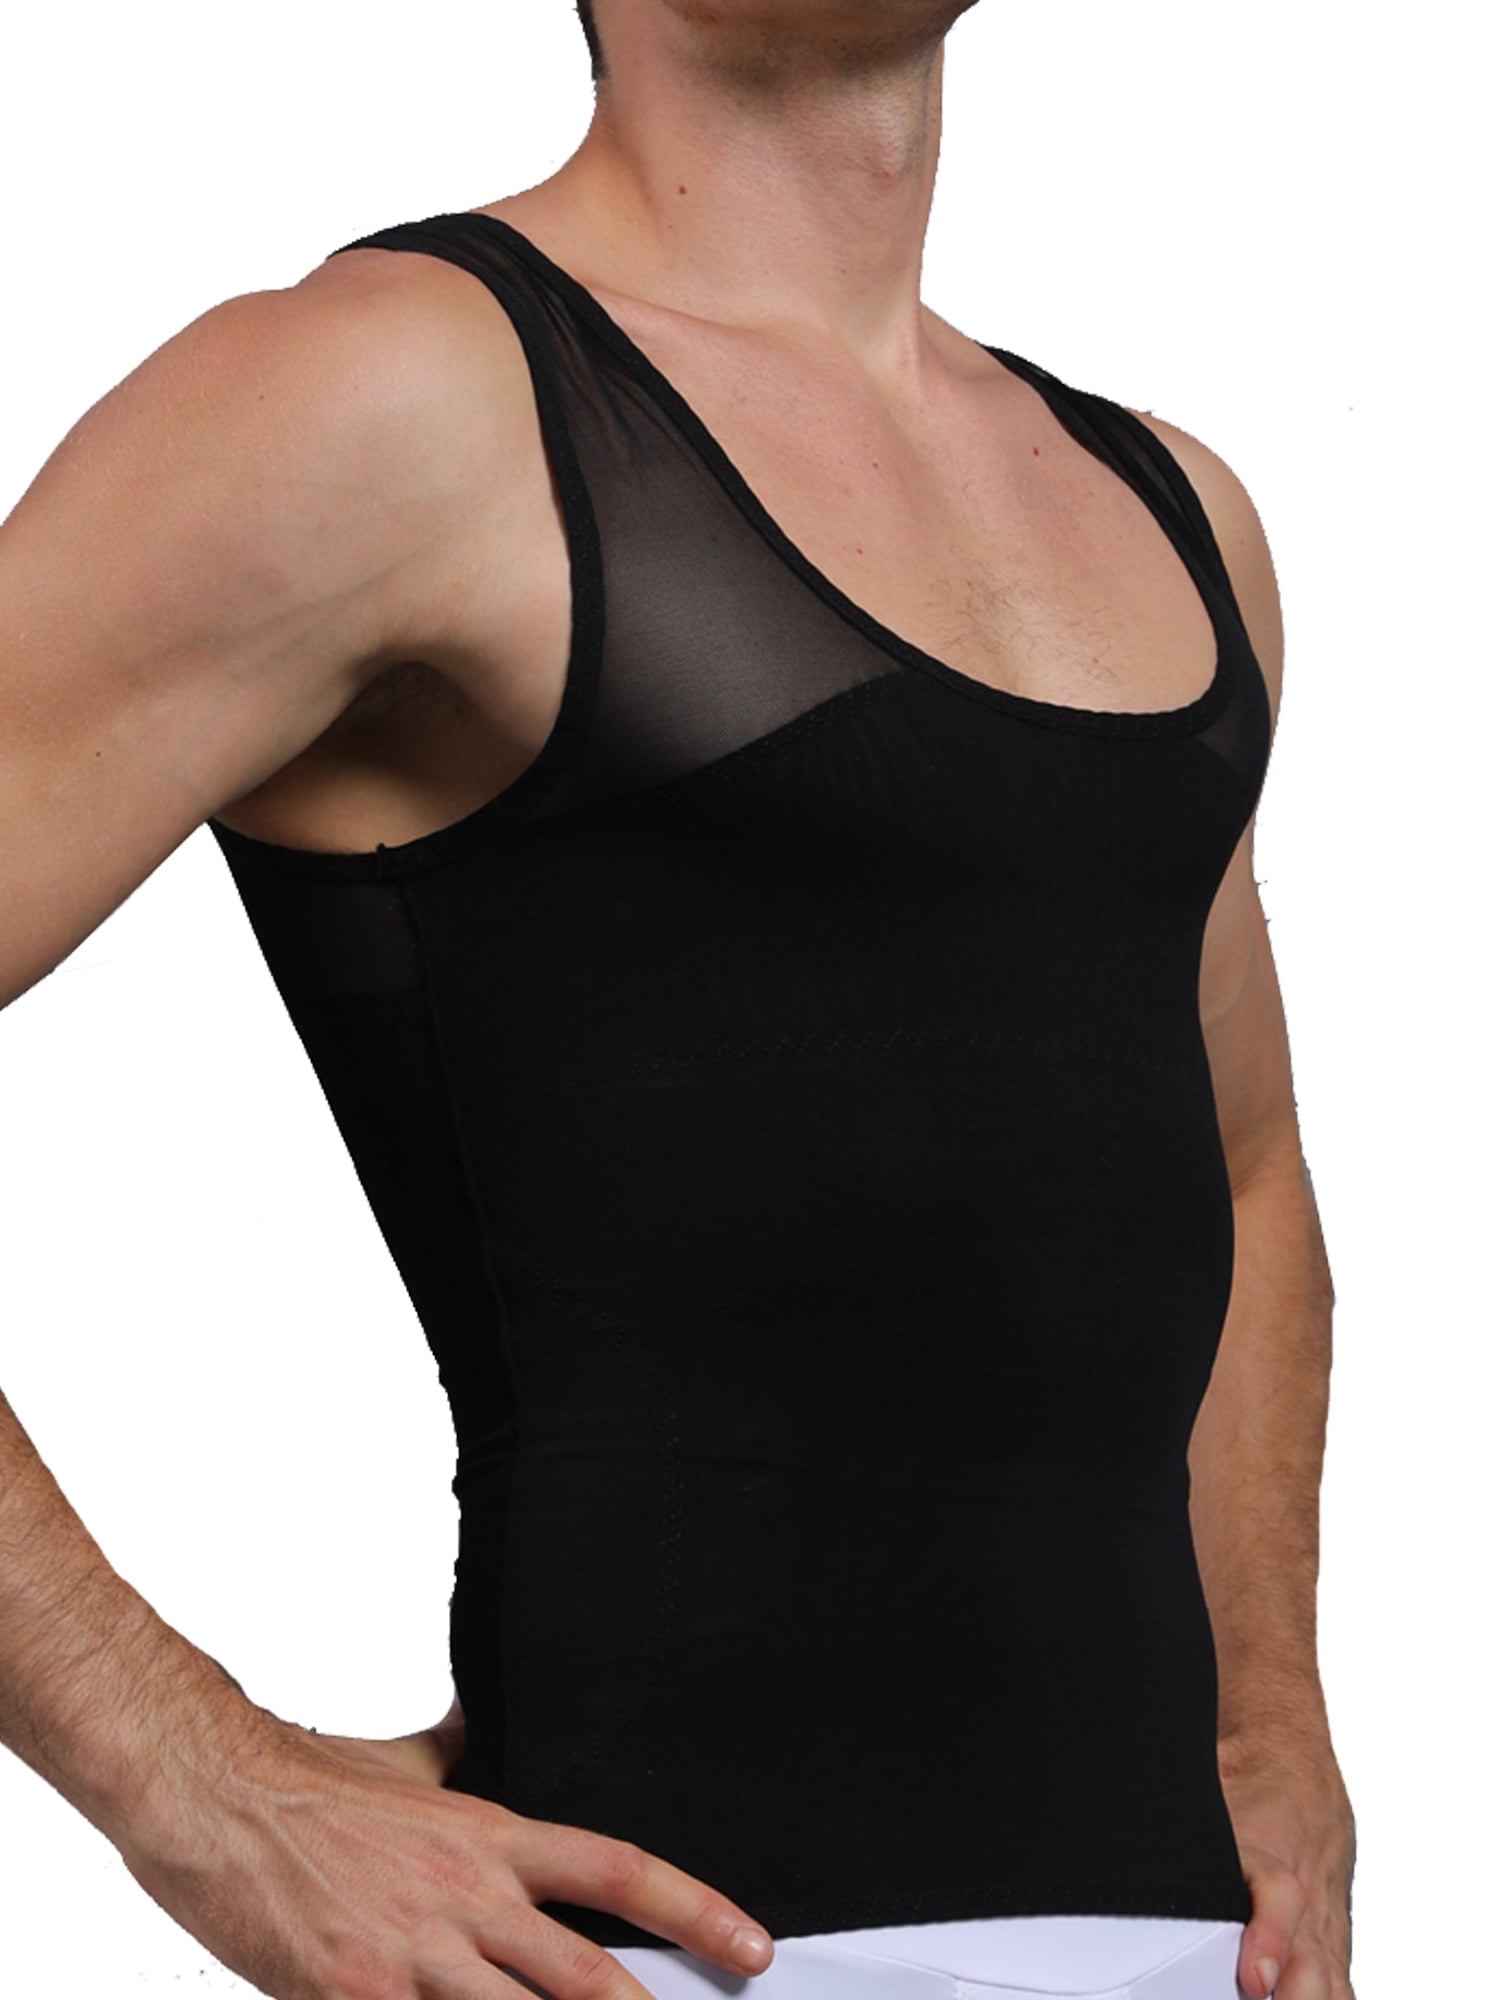 Mens Slimming Body Shaper Vest Shirt Compression Muscle Tank